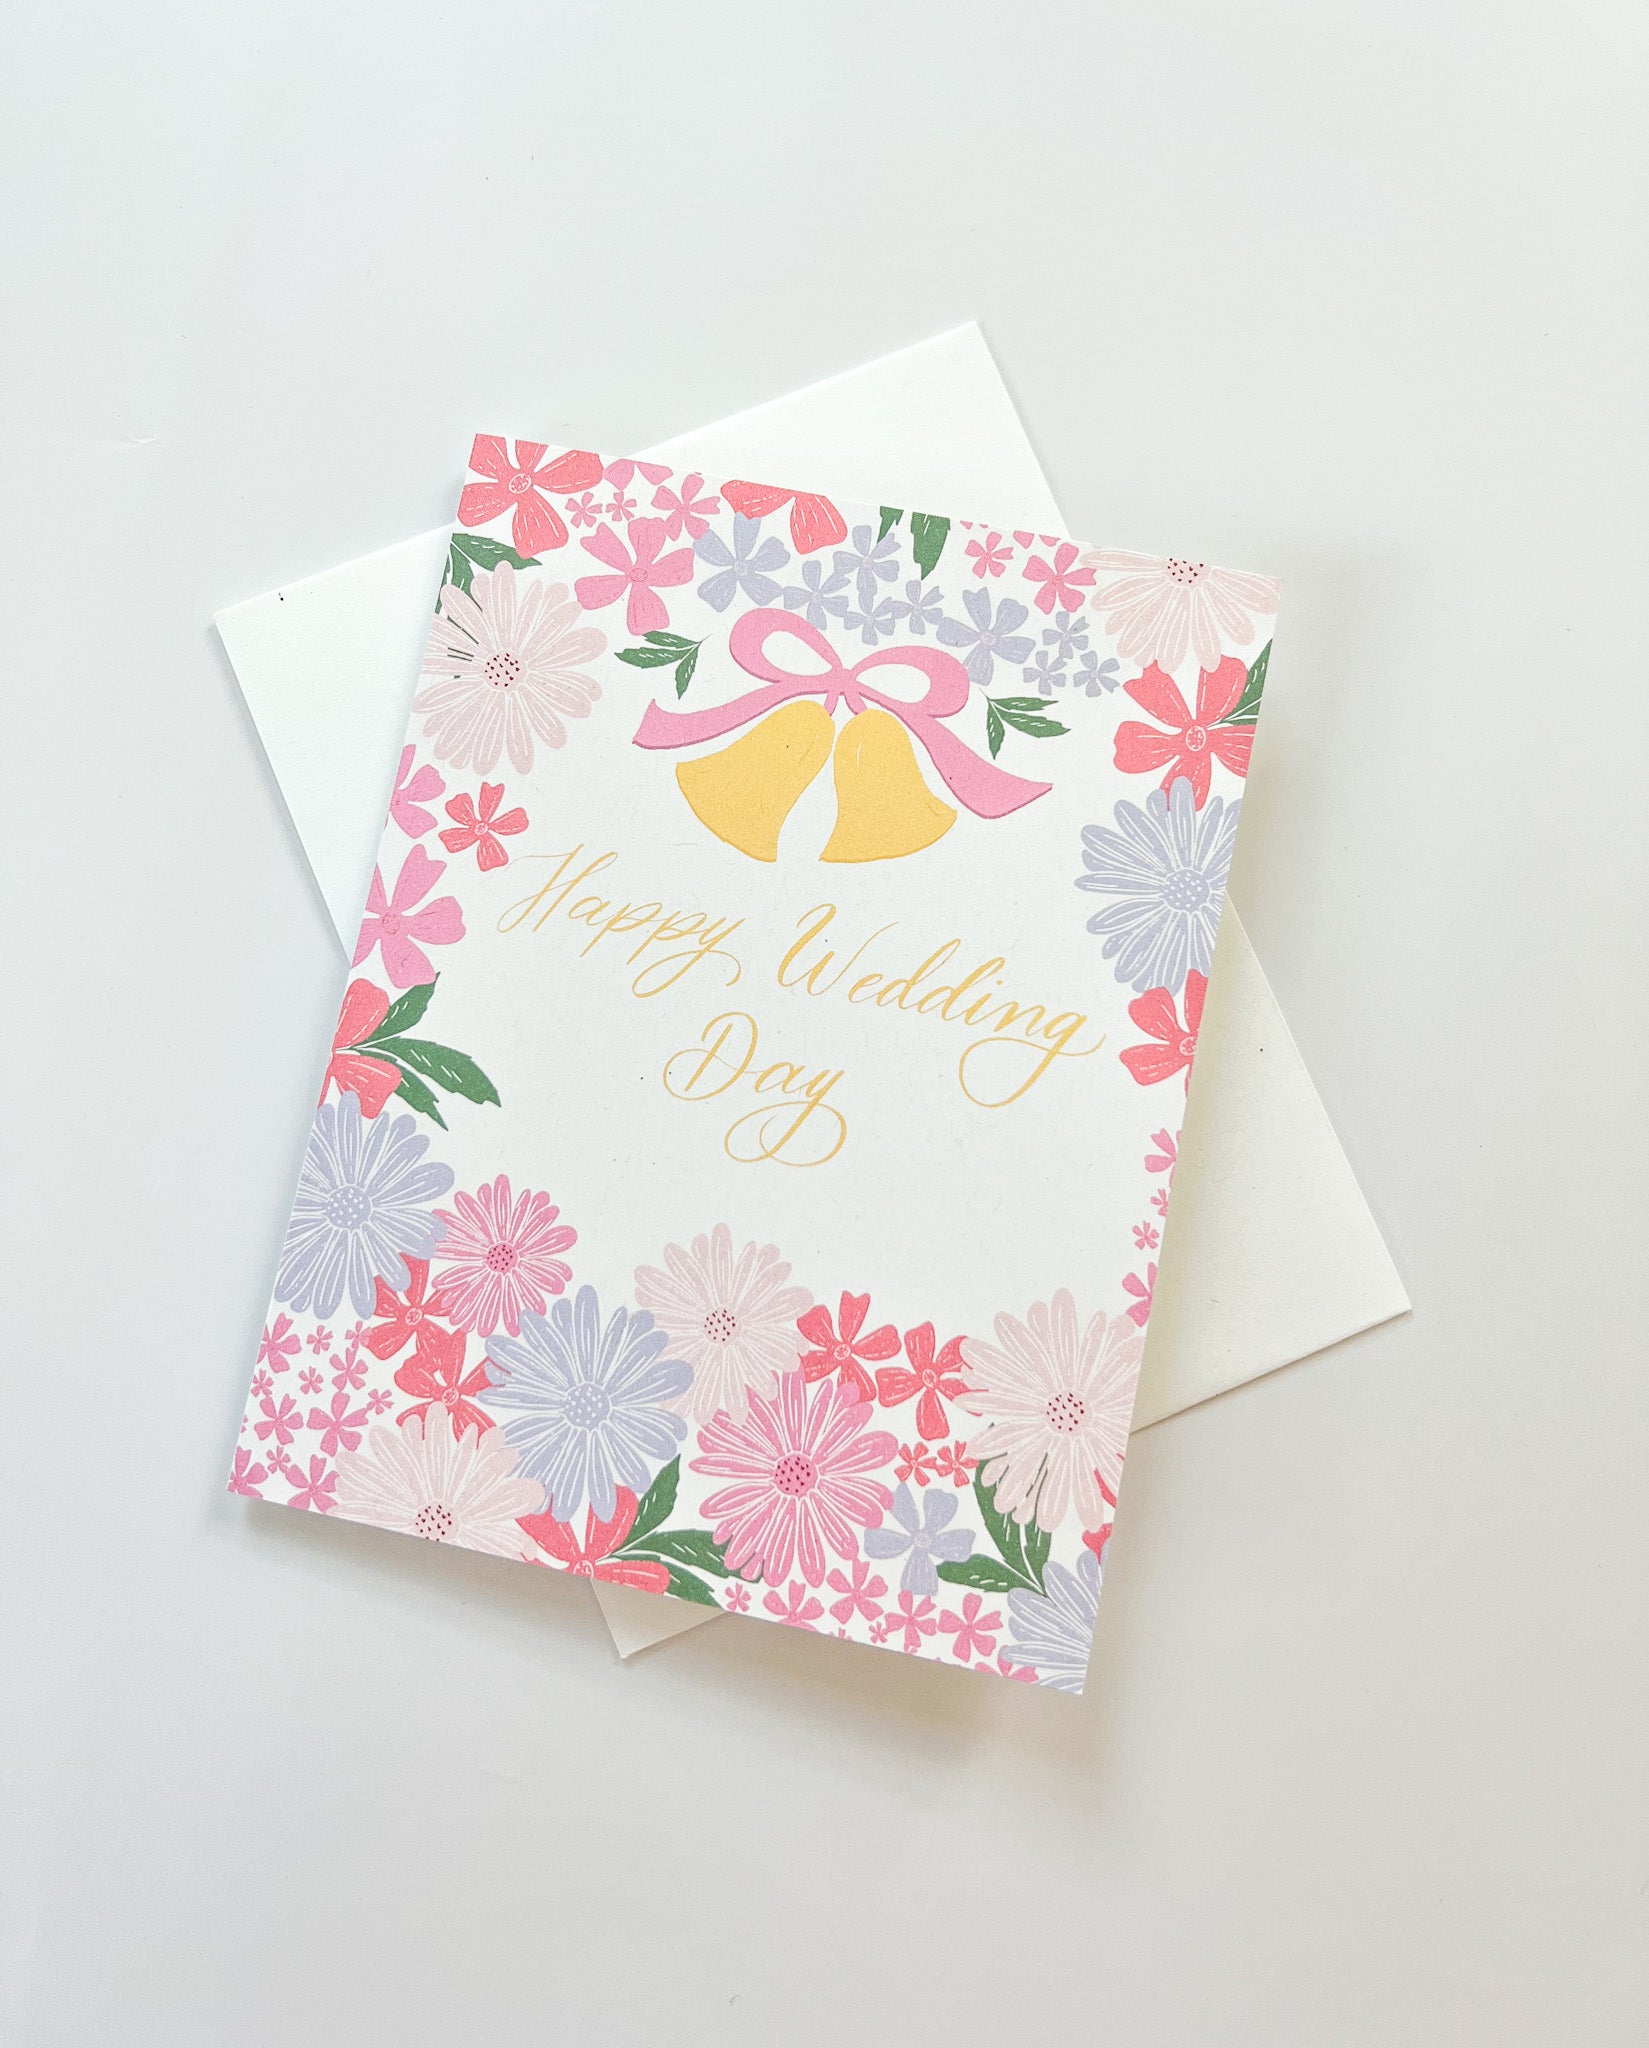 elegant wedding card for friend with flowers